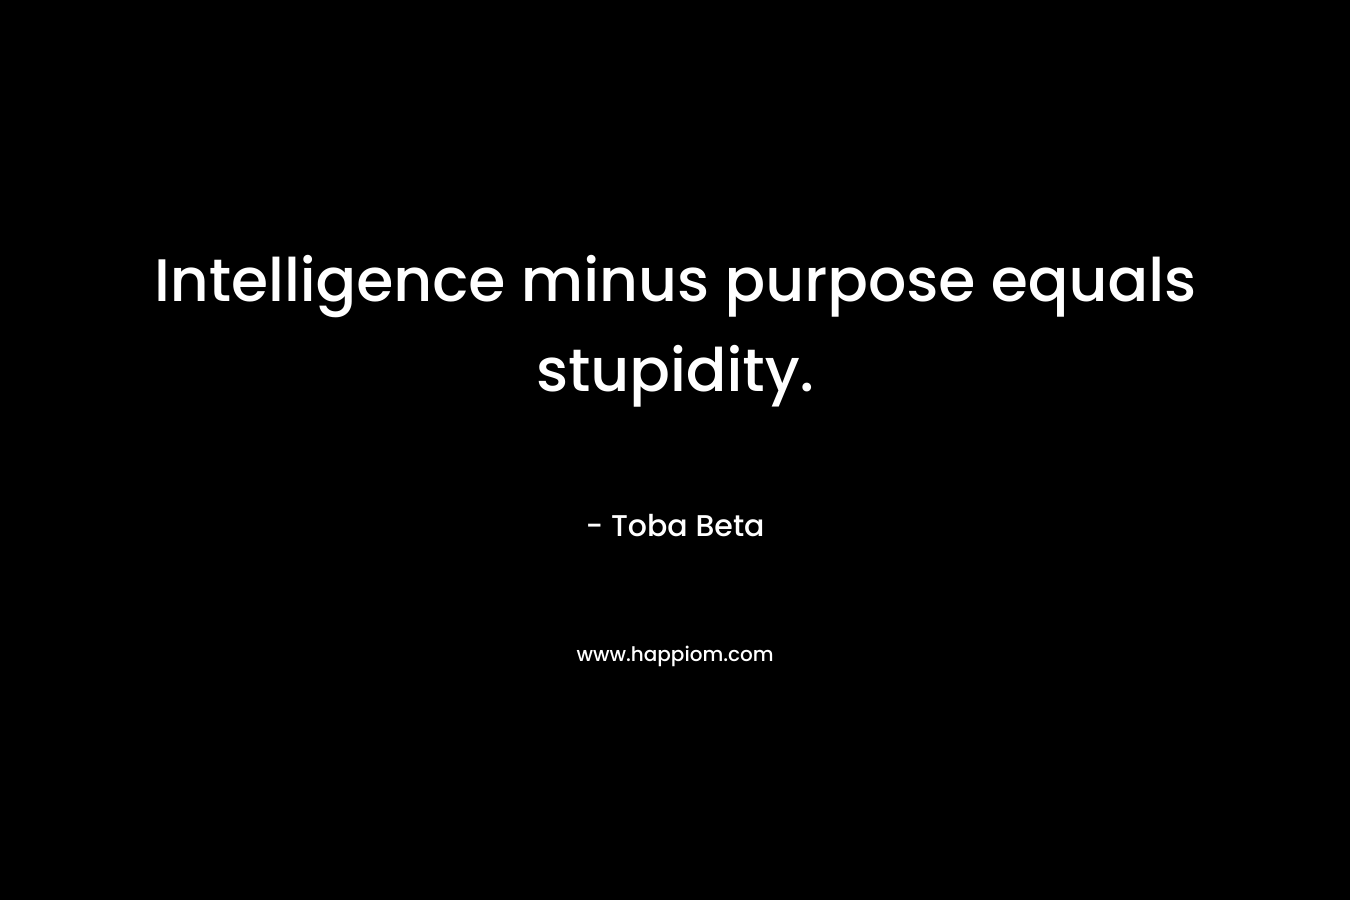 Intelligence minus purpose equals stupidity.